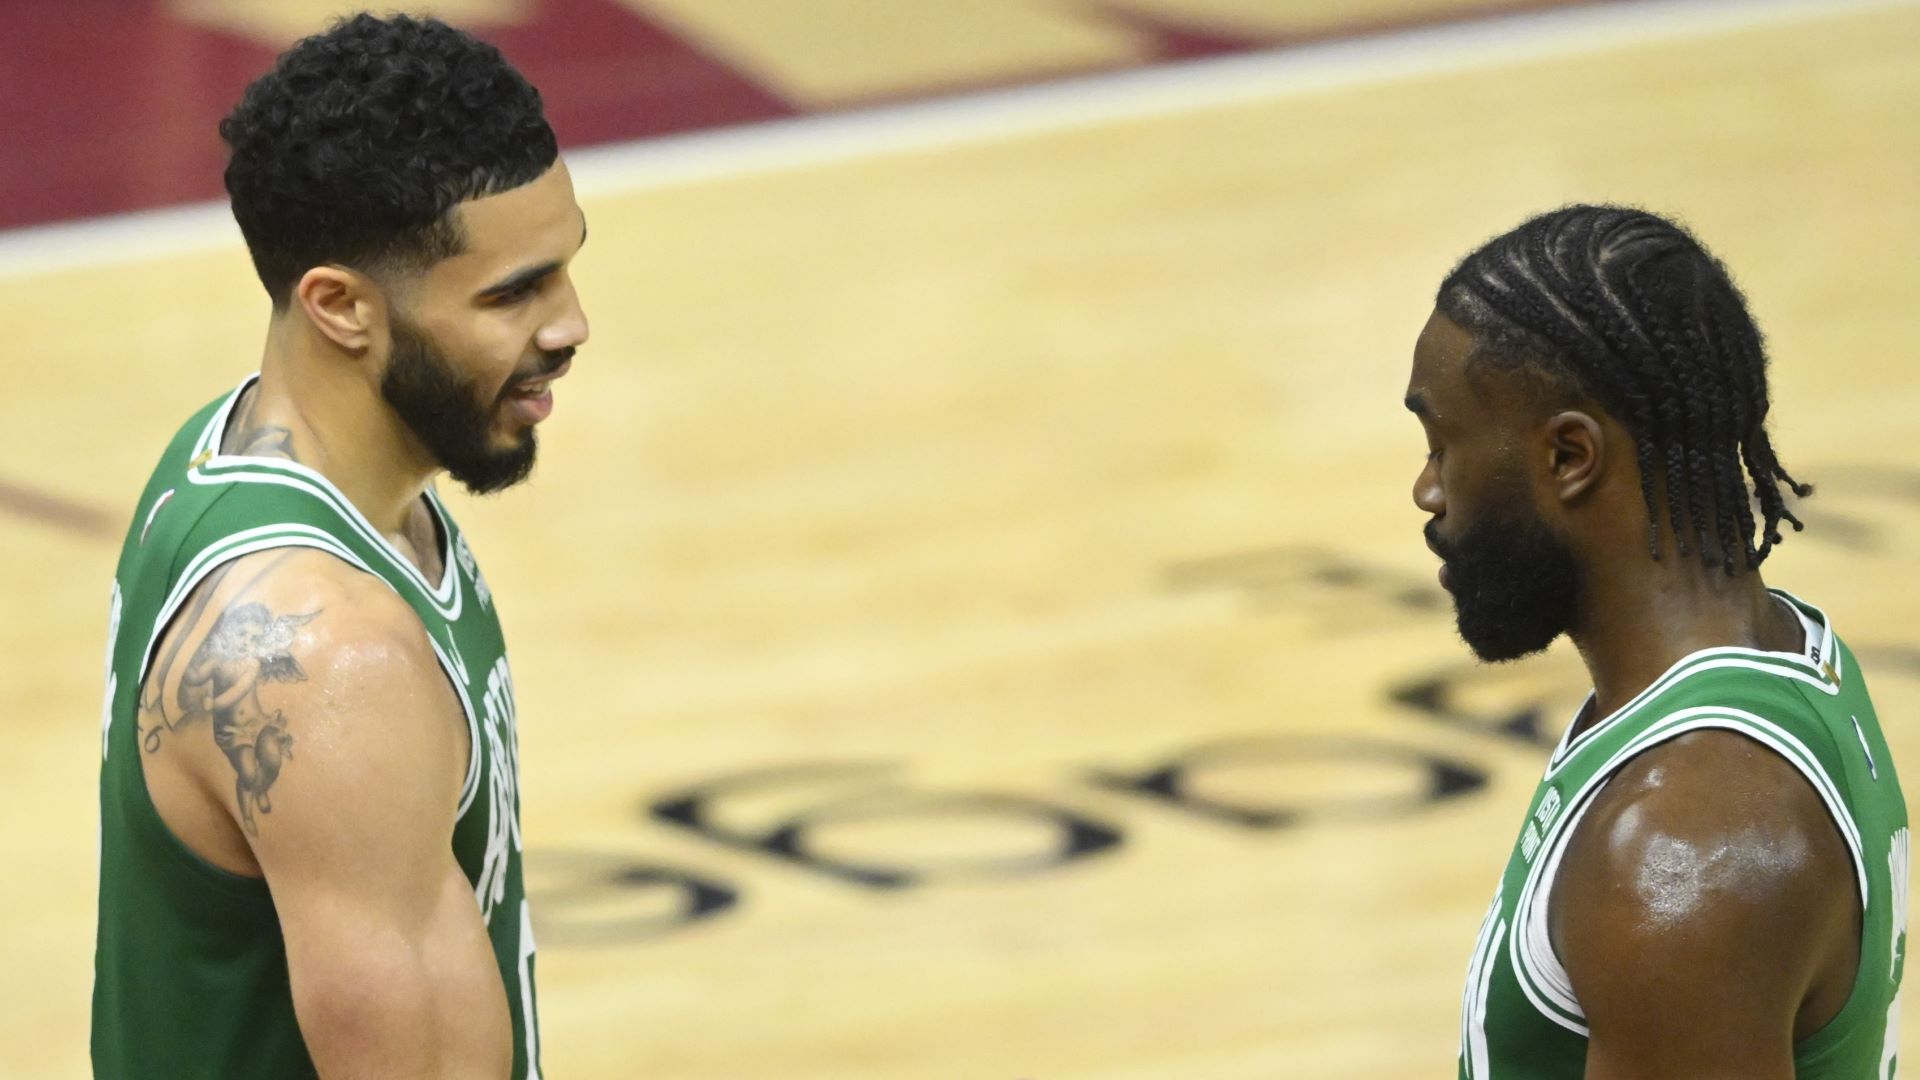 Celtics’ Jayson Tatum Jokes About Hitting Jaylen Brown After Dagger
Game 4 Shot